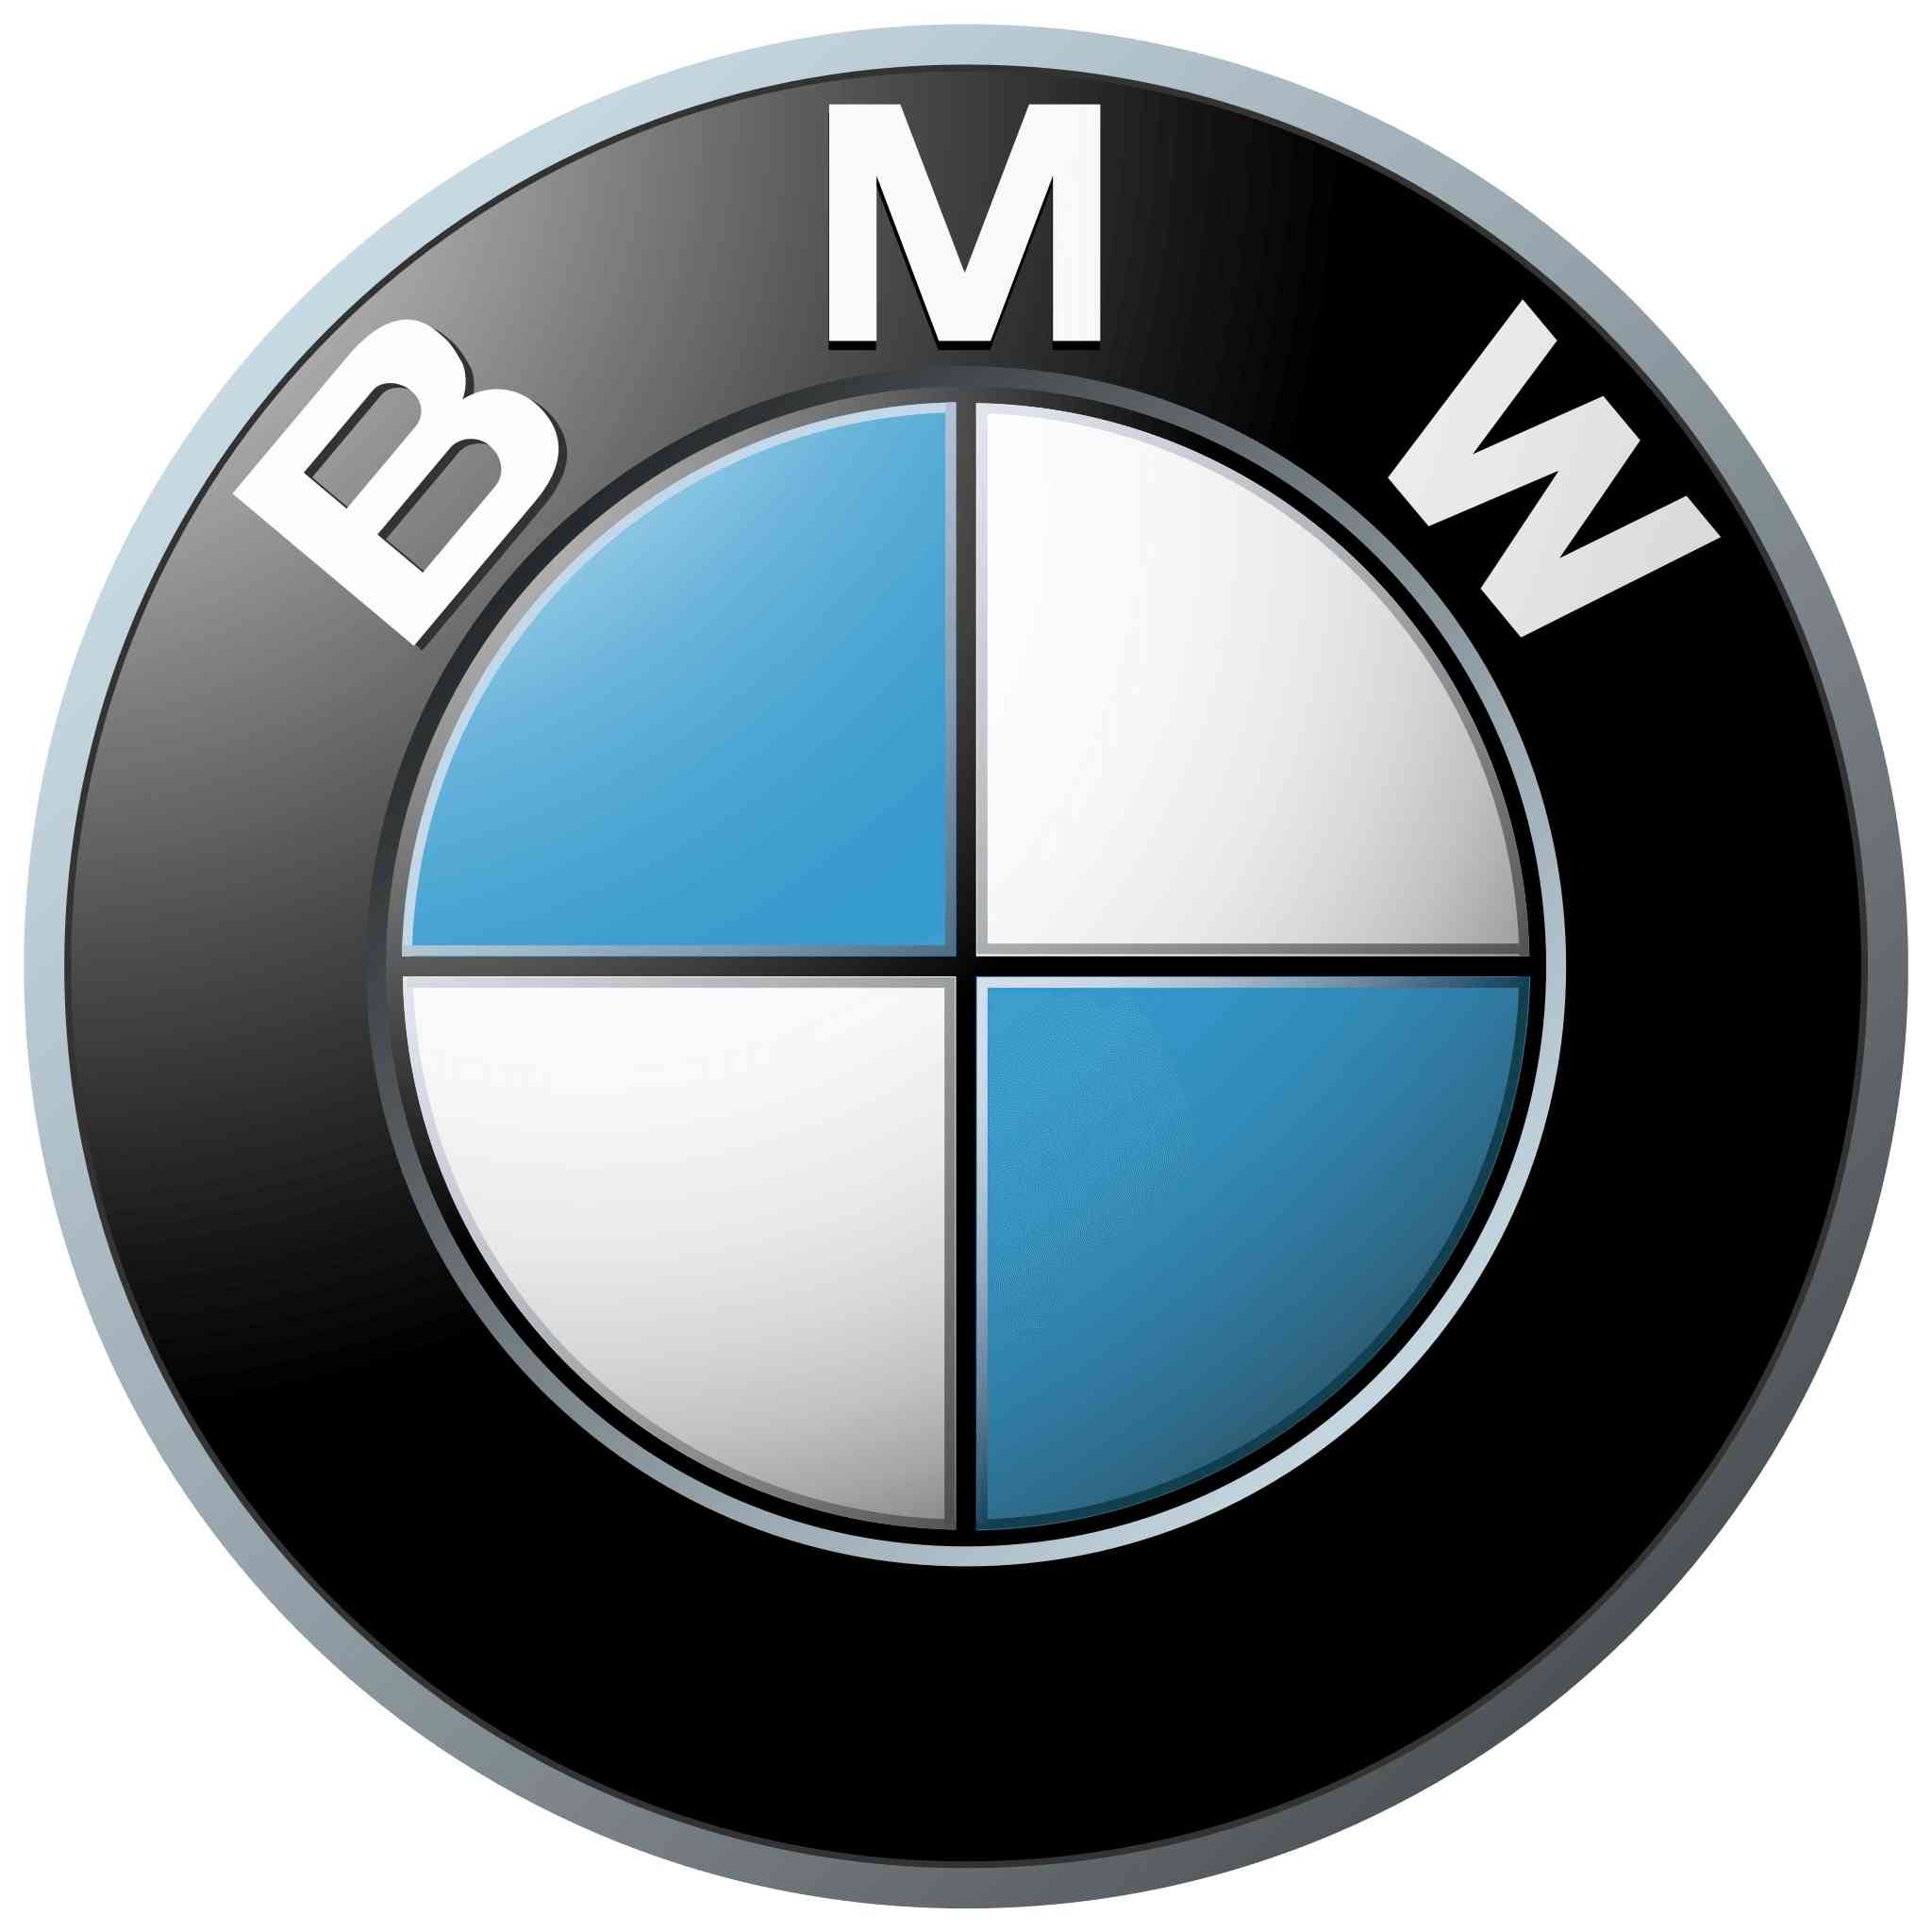 Repuestos BMW